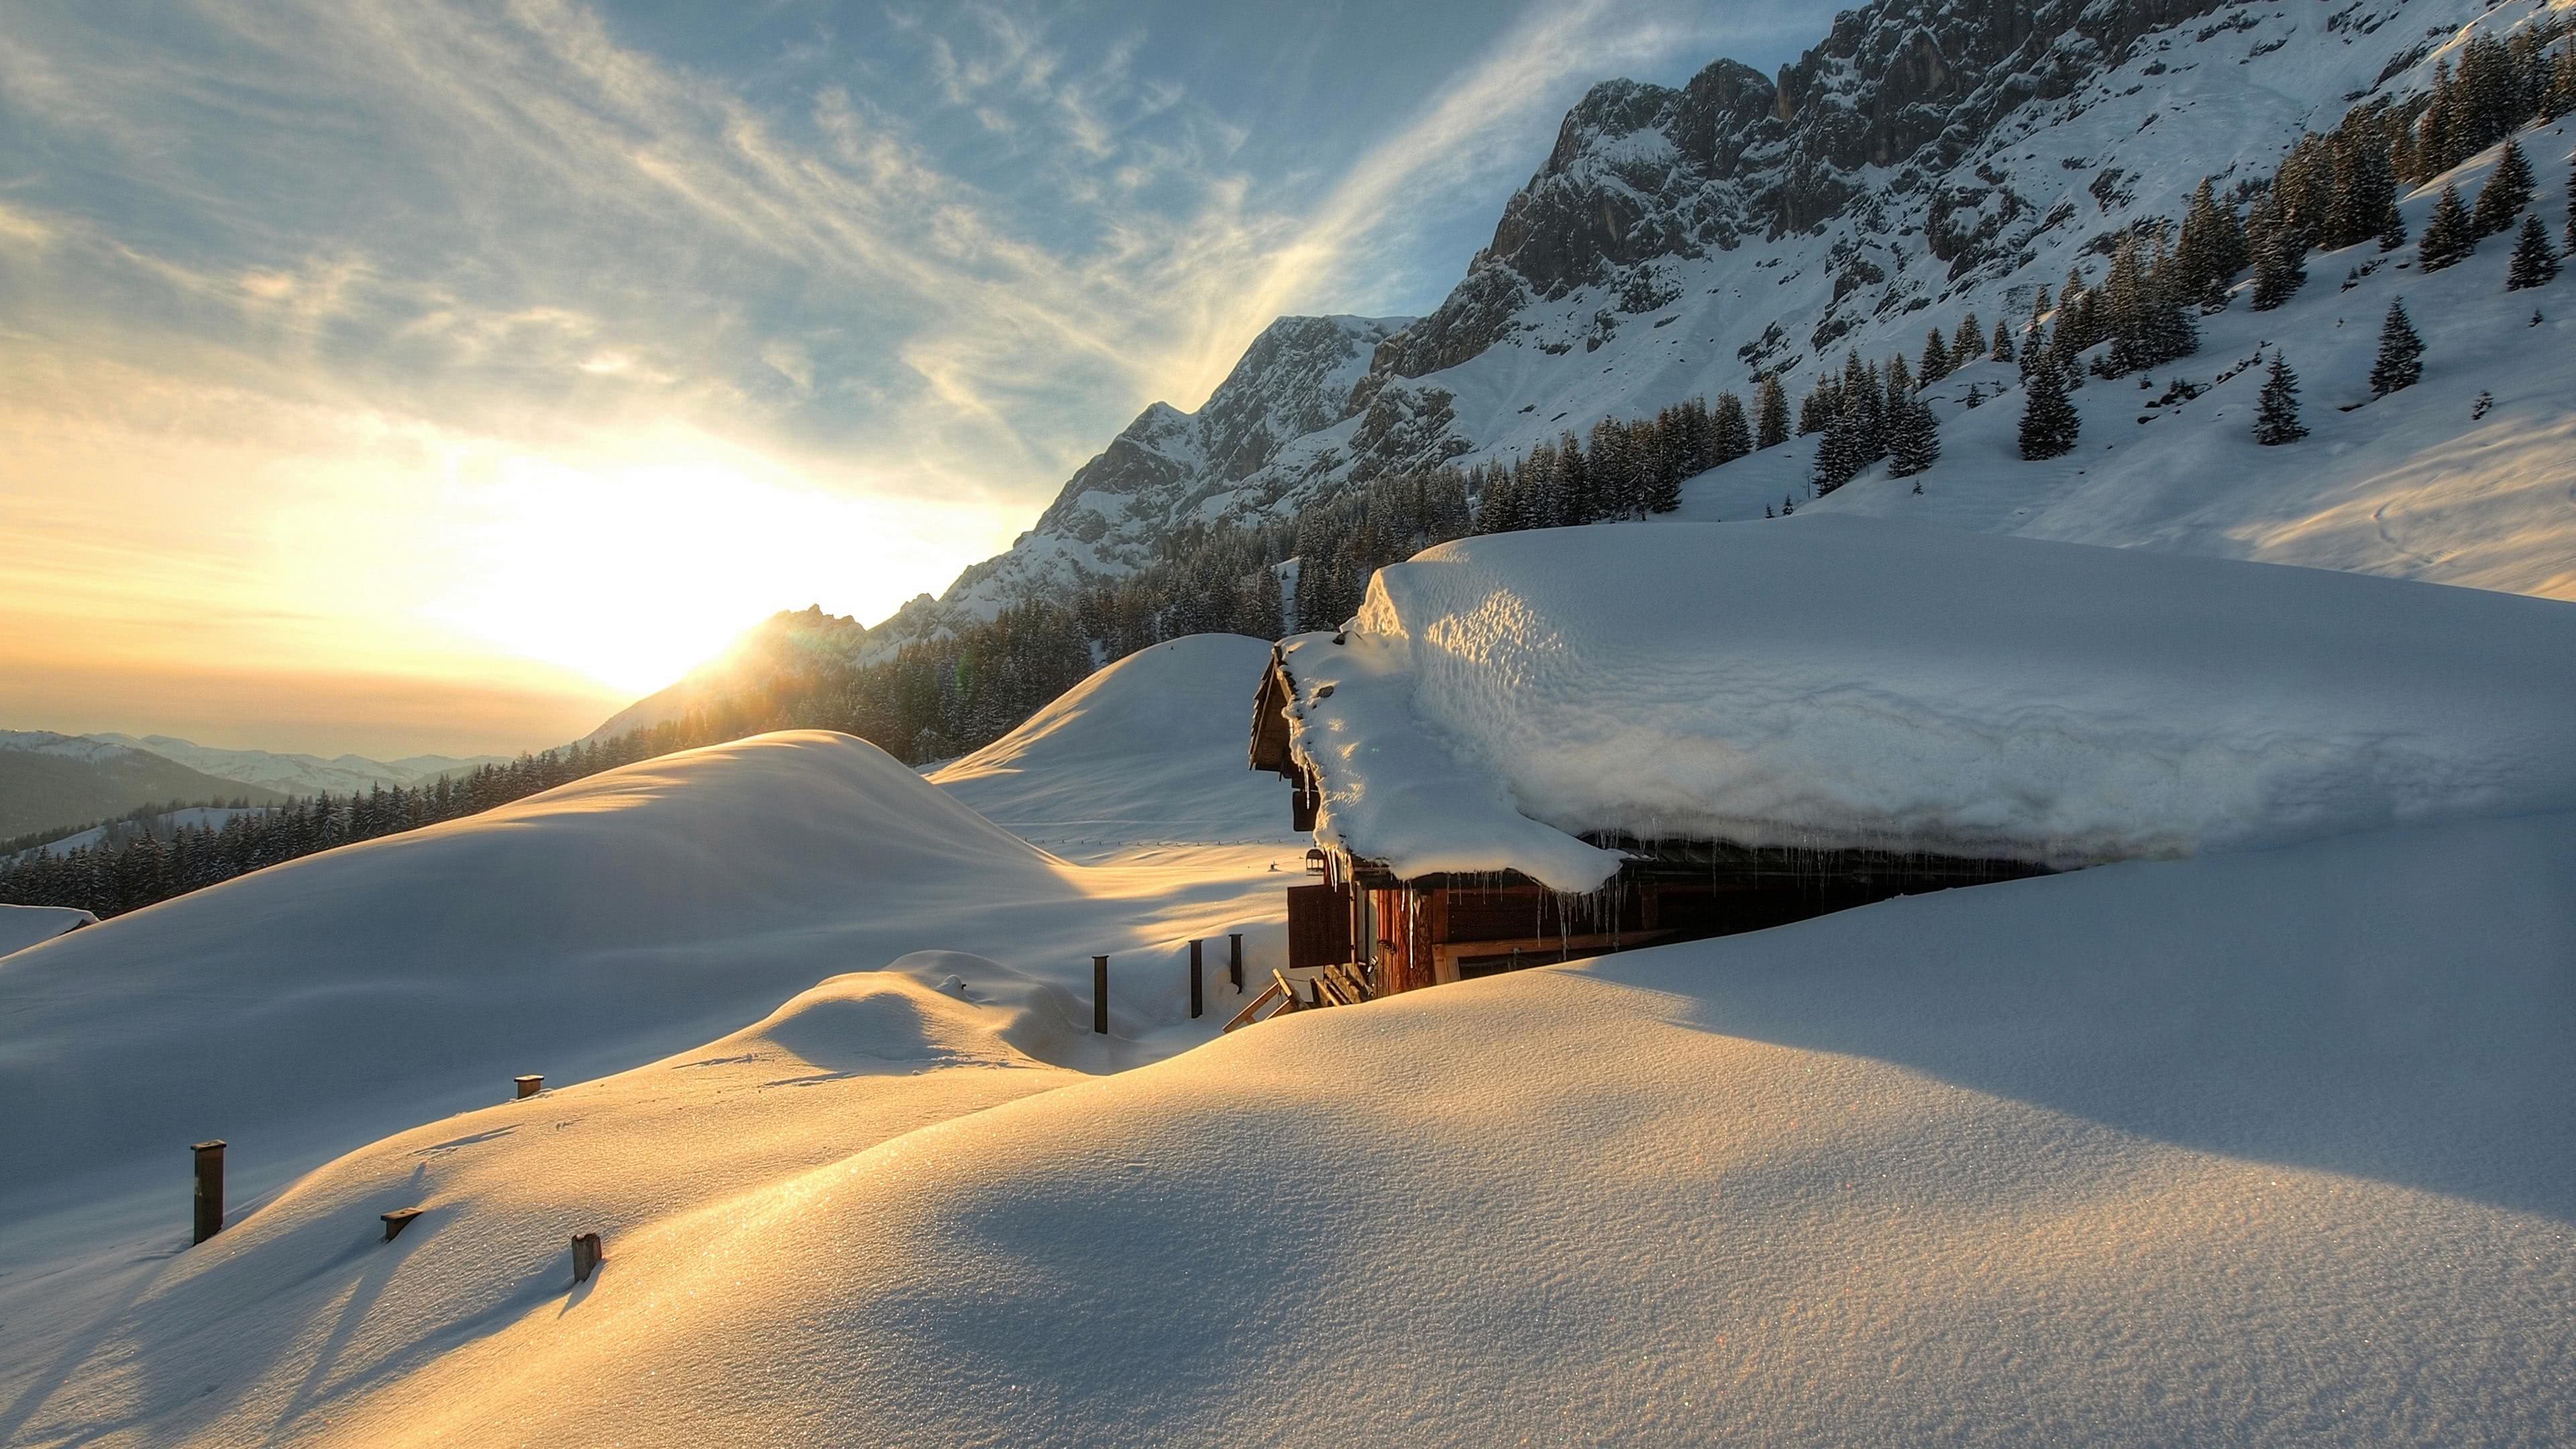 Winter Mountains In Austria Uhd 4k Wallpaper - HD Wallpaper 